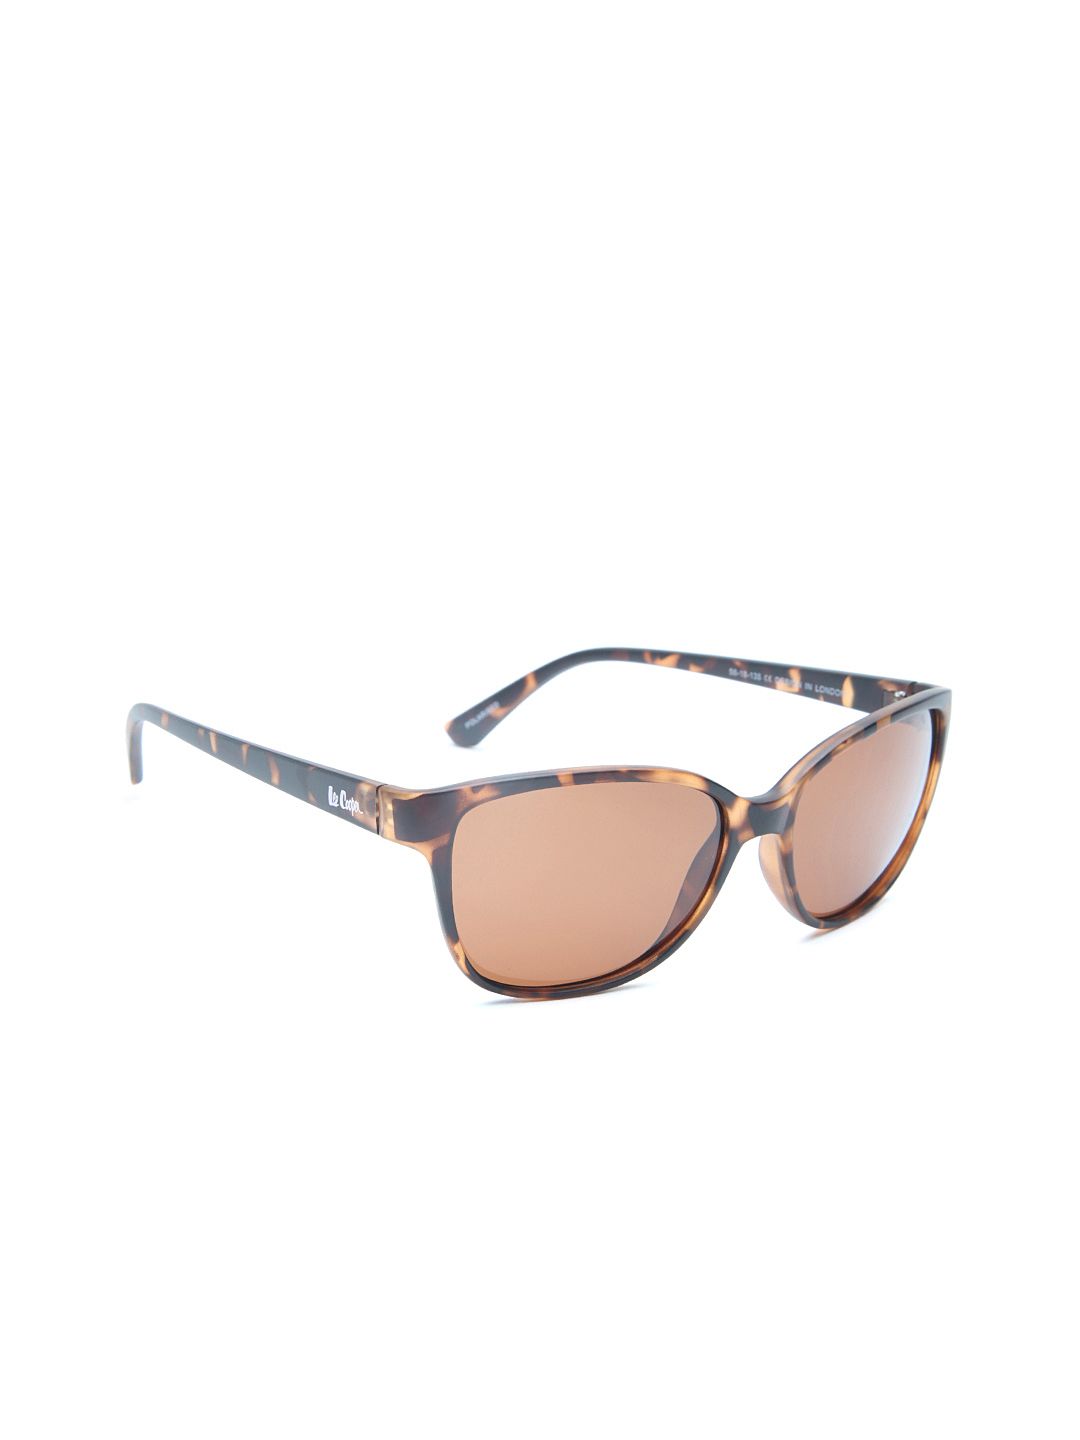 Lee Cooper Women Square Sunglasses LC9123SVB Price in India